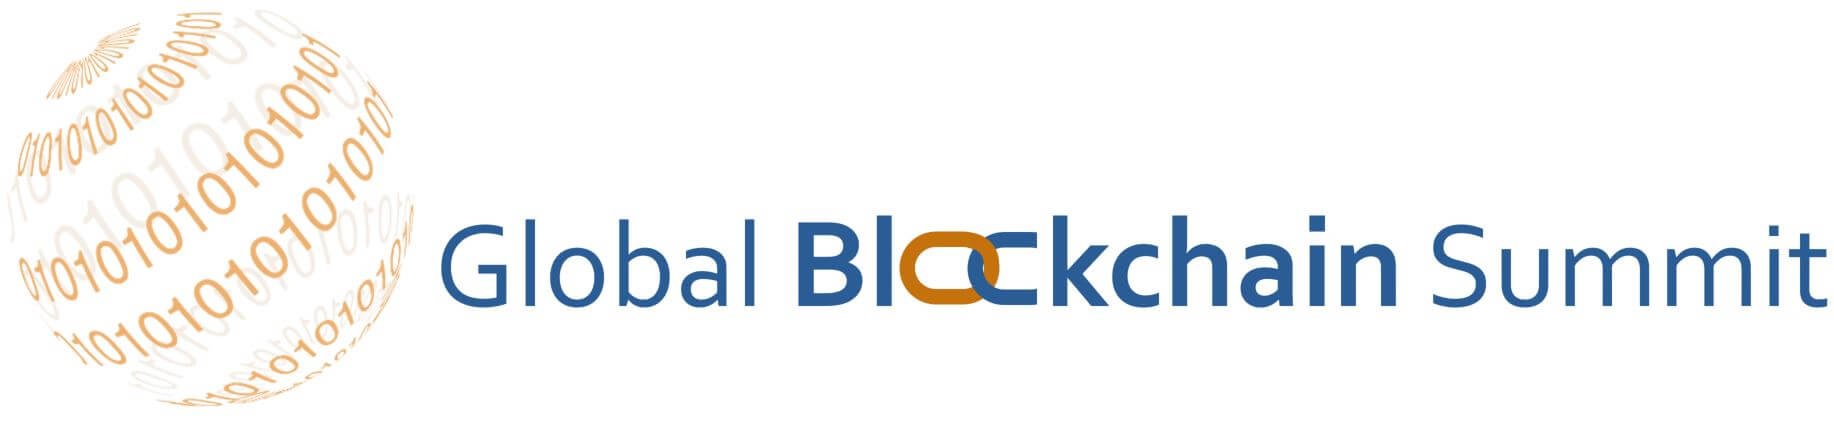 Global Blockchain Summit